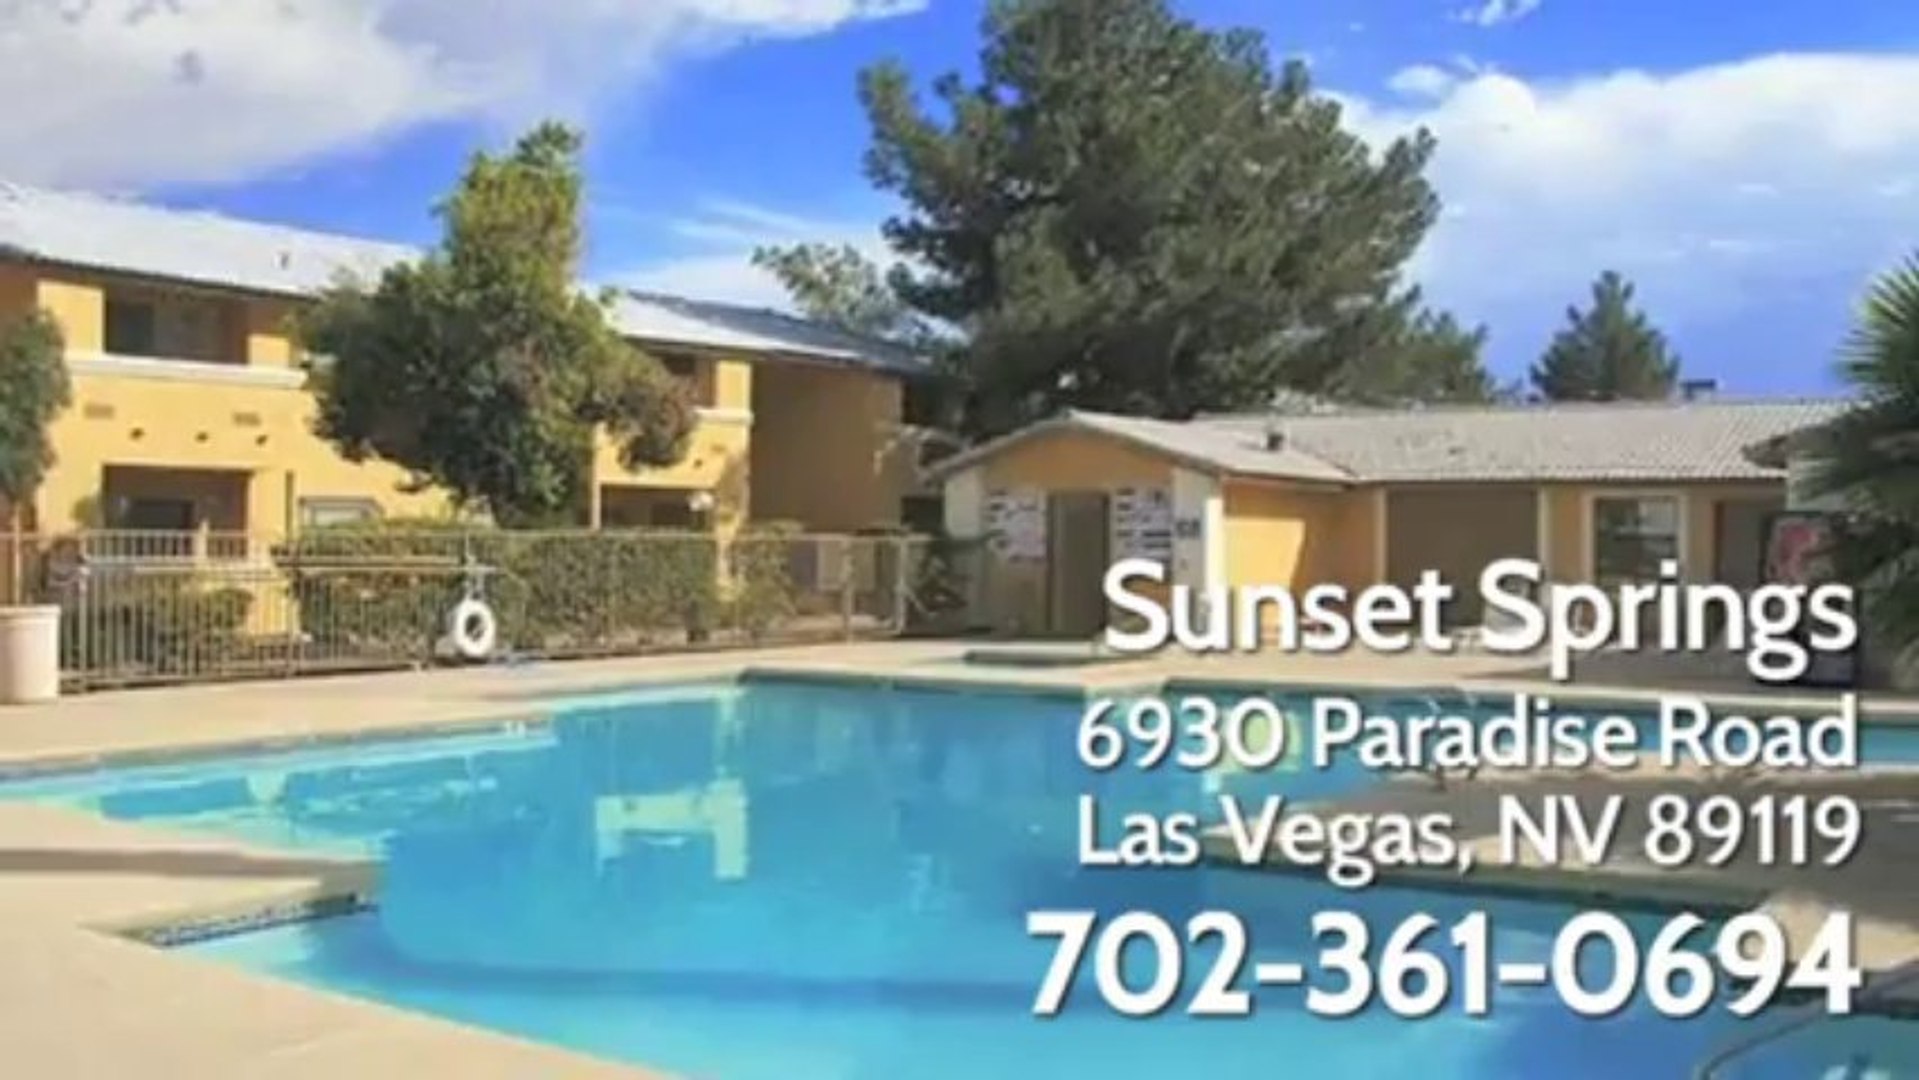 Sunset Springs Apartments In Las Vegas